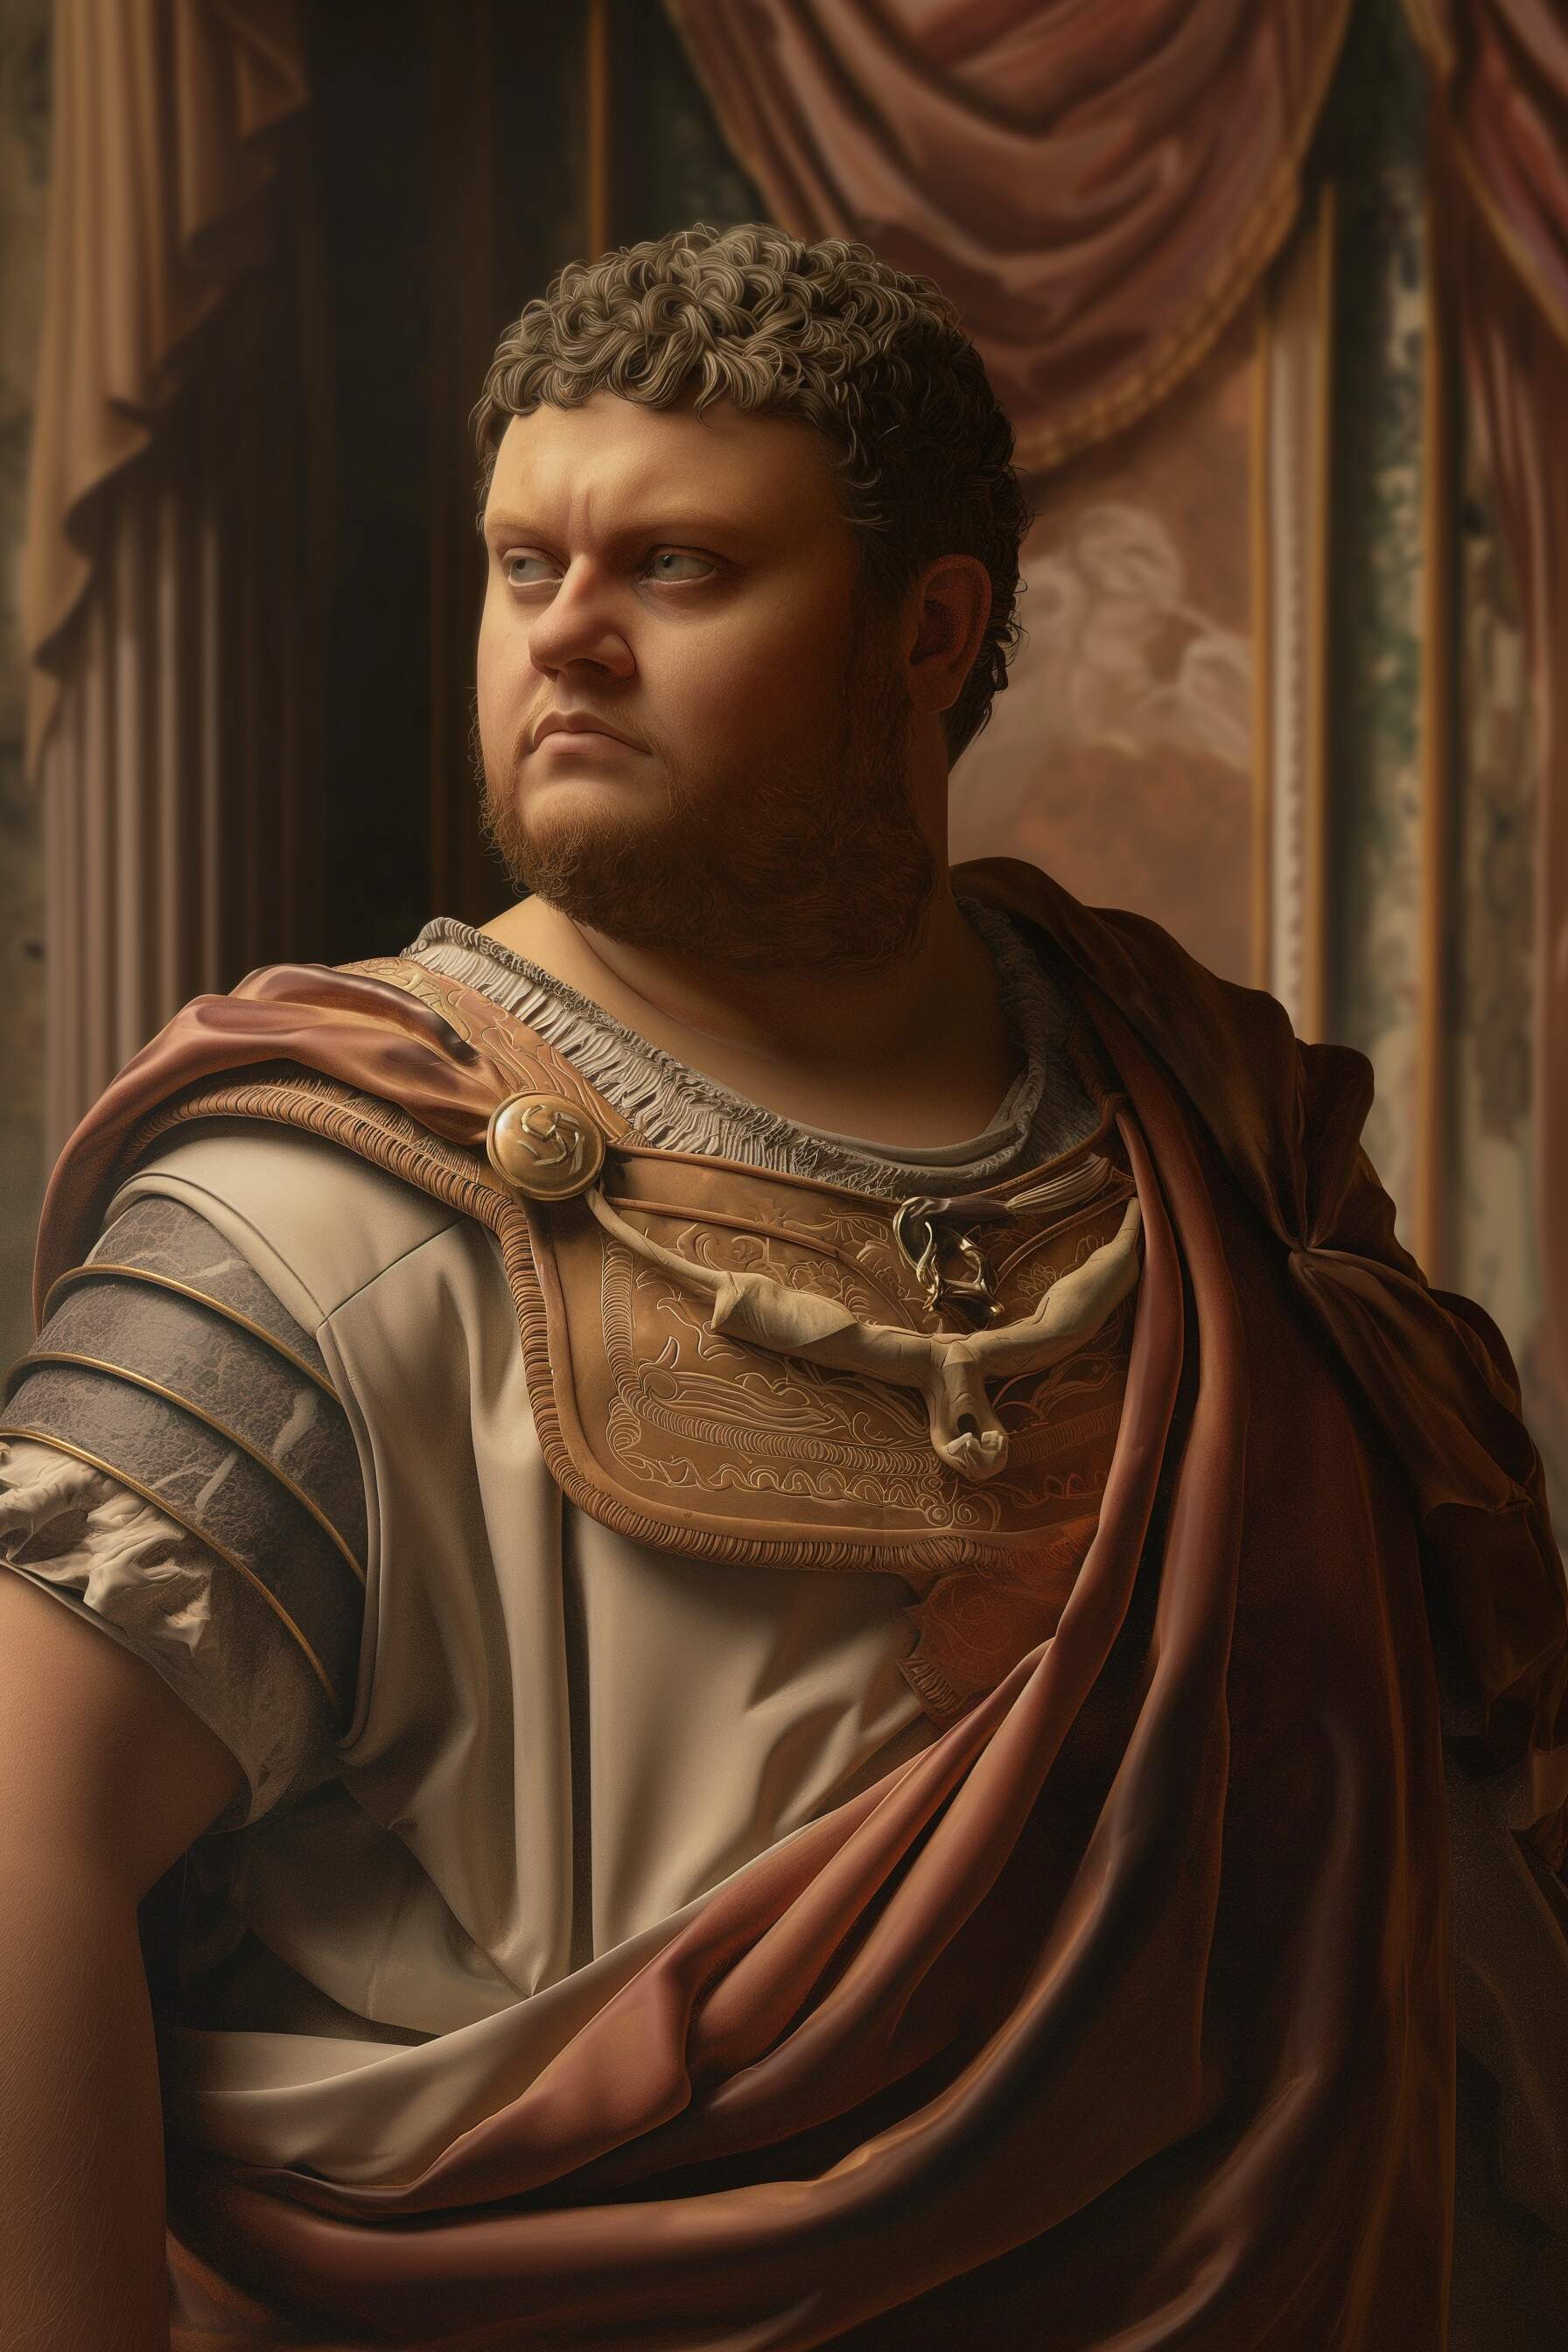 Emperor Geta’s possible portrait photo